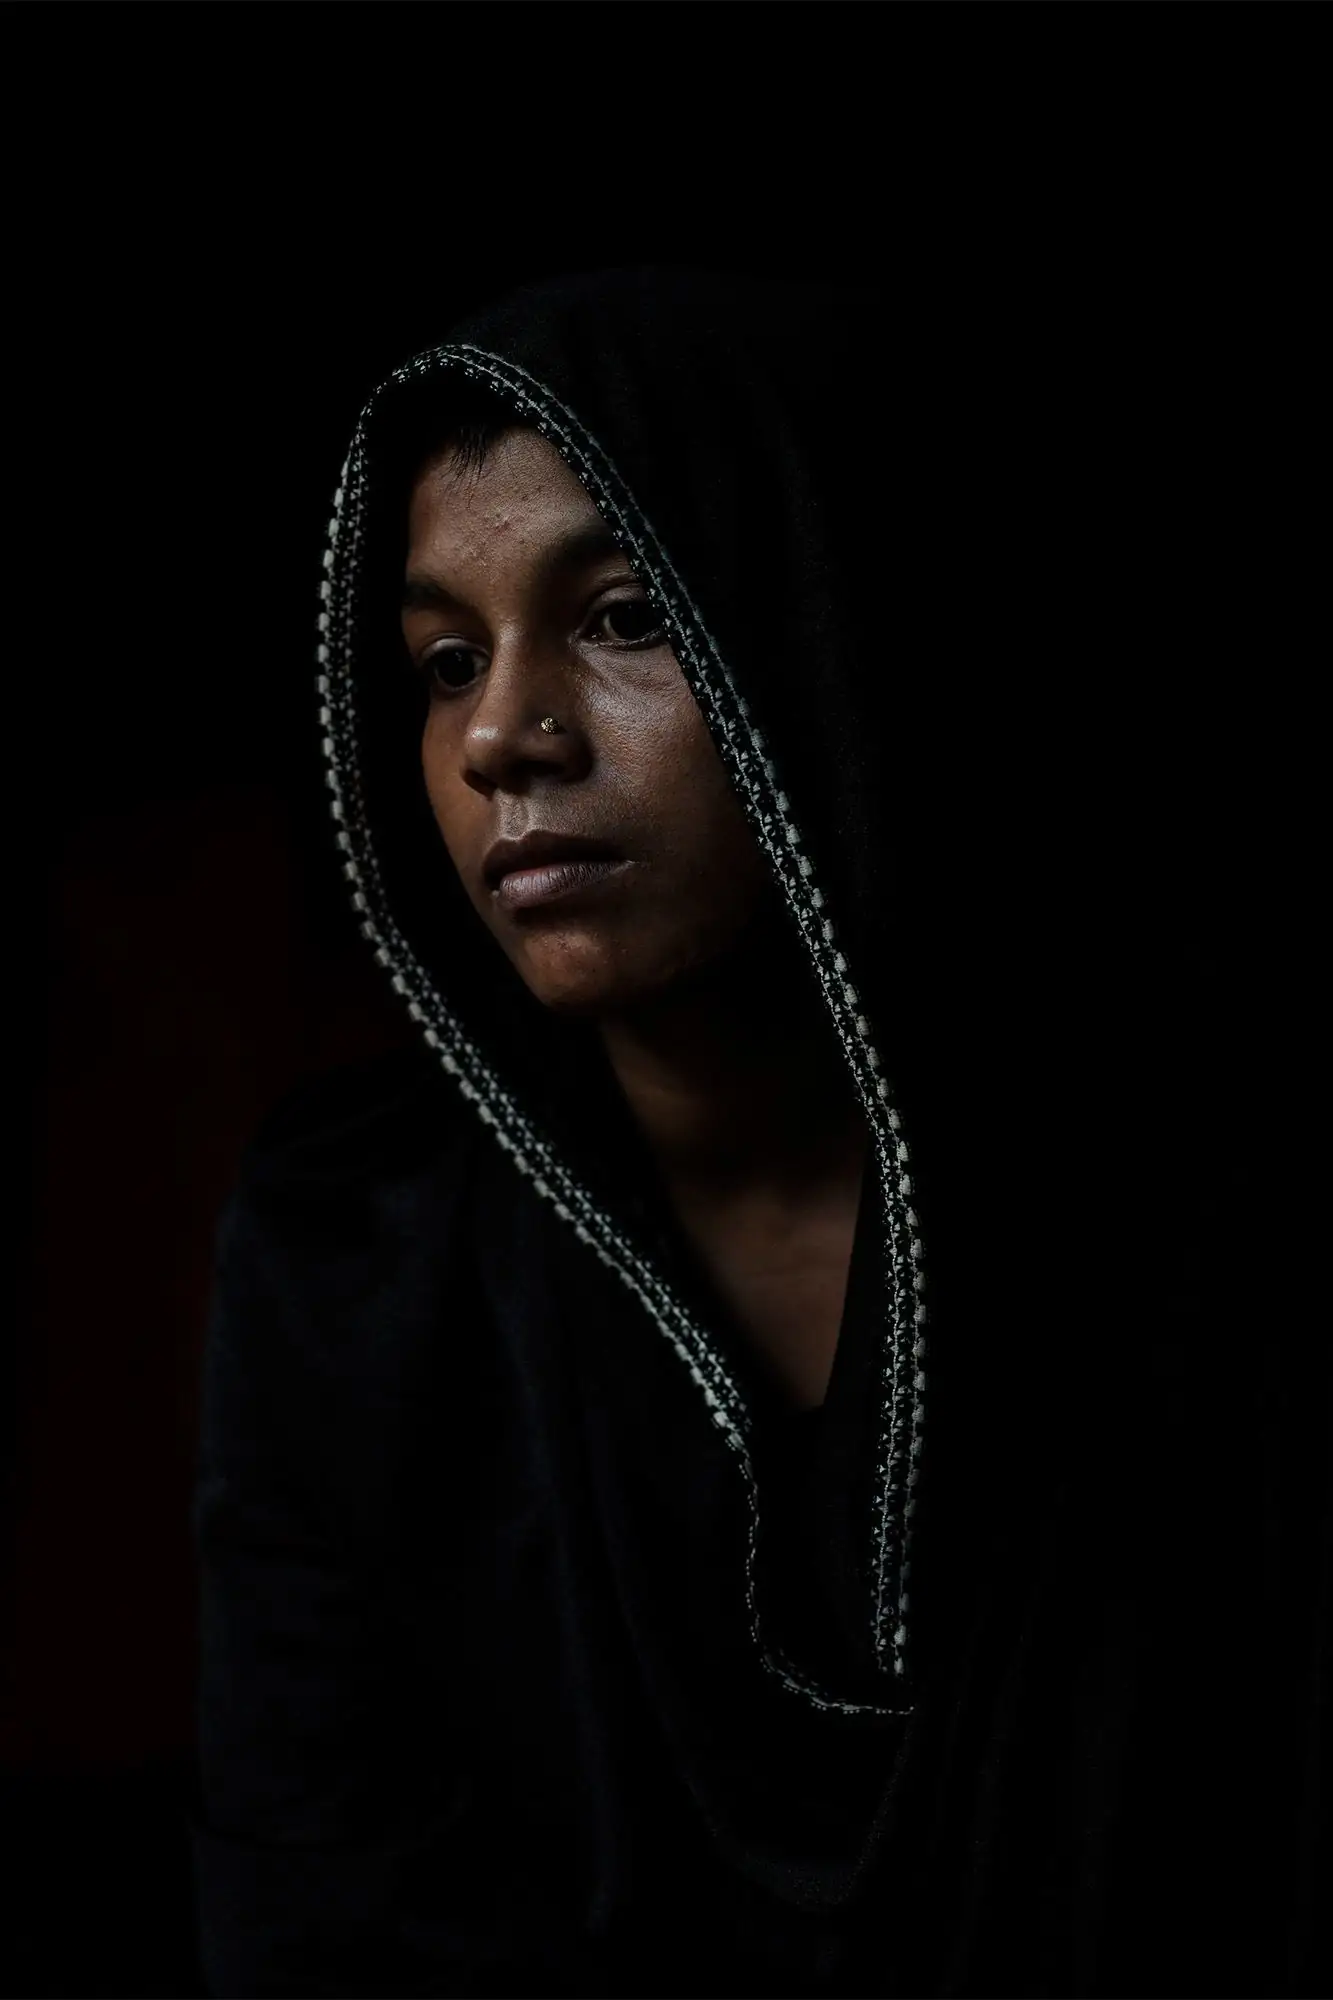 Patrick Brown EXODUS 摄影展 RCB EXODUS Cox’s Bazaar 难民营 罗兴亚难民